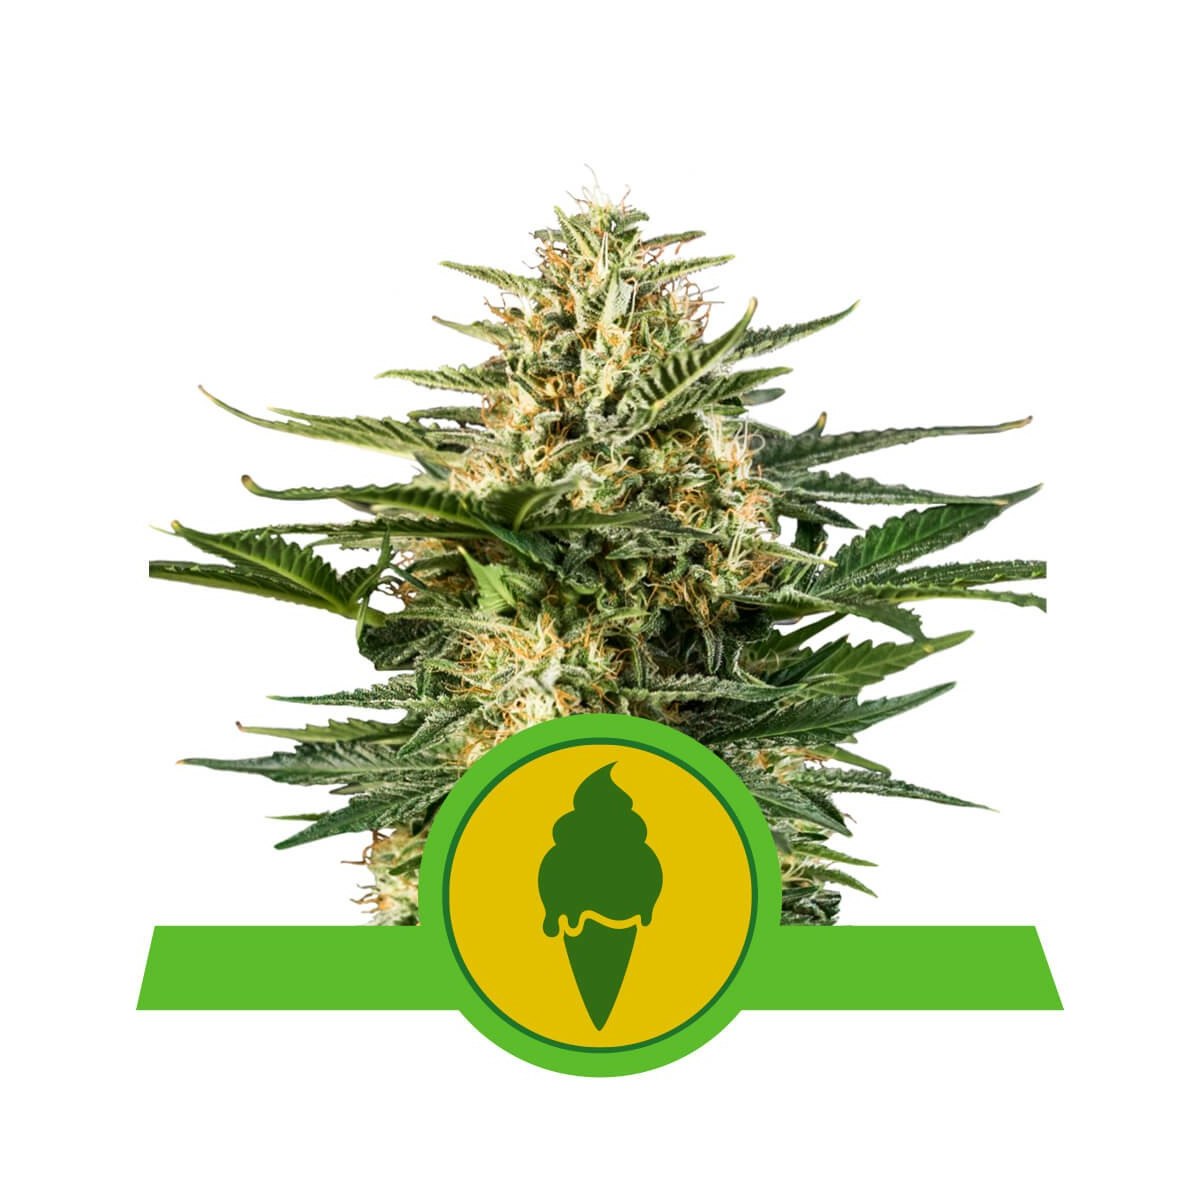 Semi Cannabis Green Gelato automatici o autofiorenti Marijuana